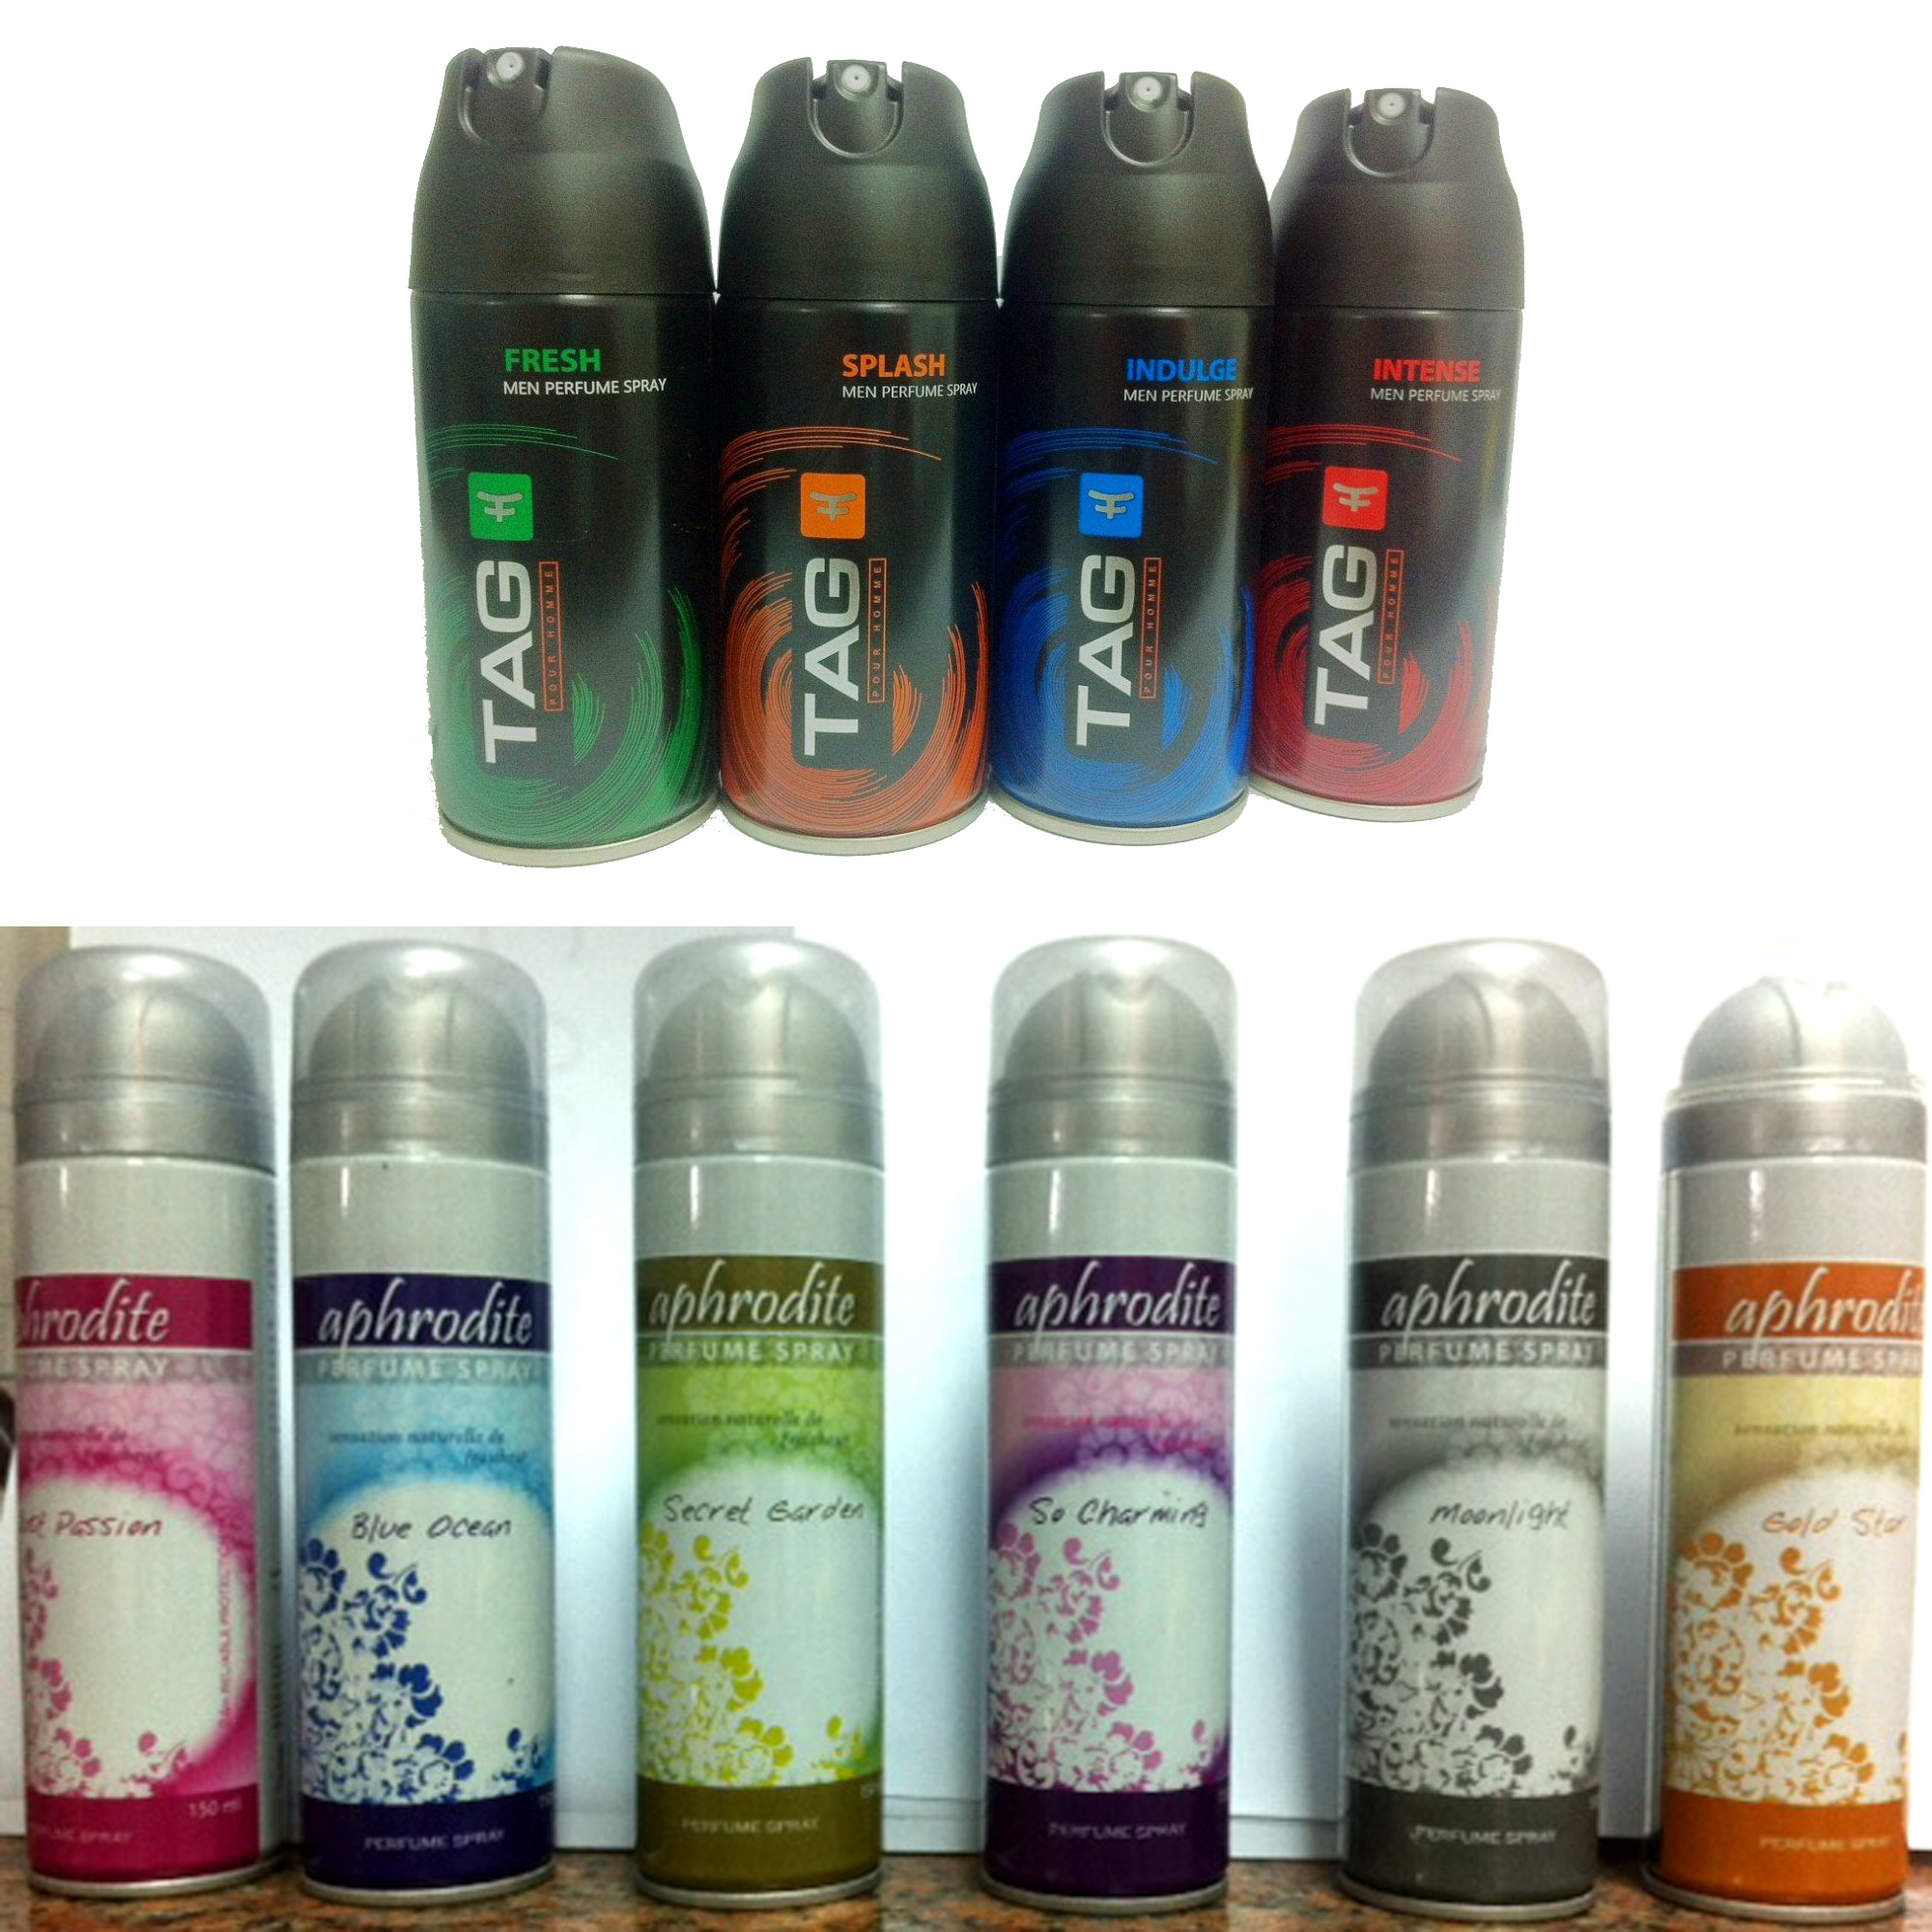 perfume body spray deodorant